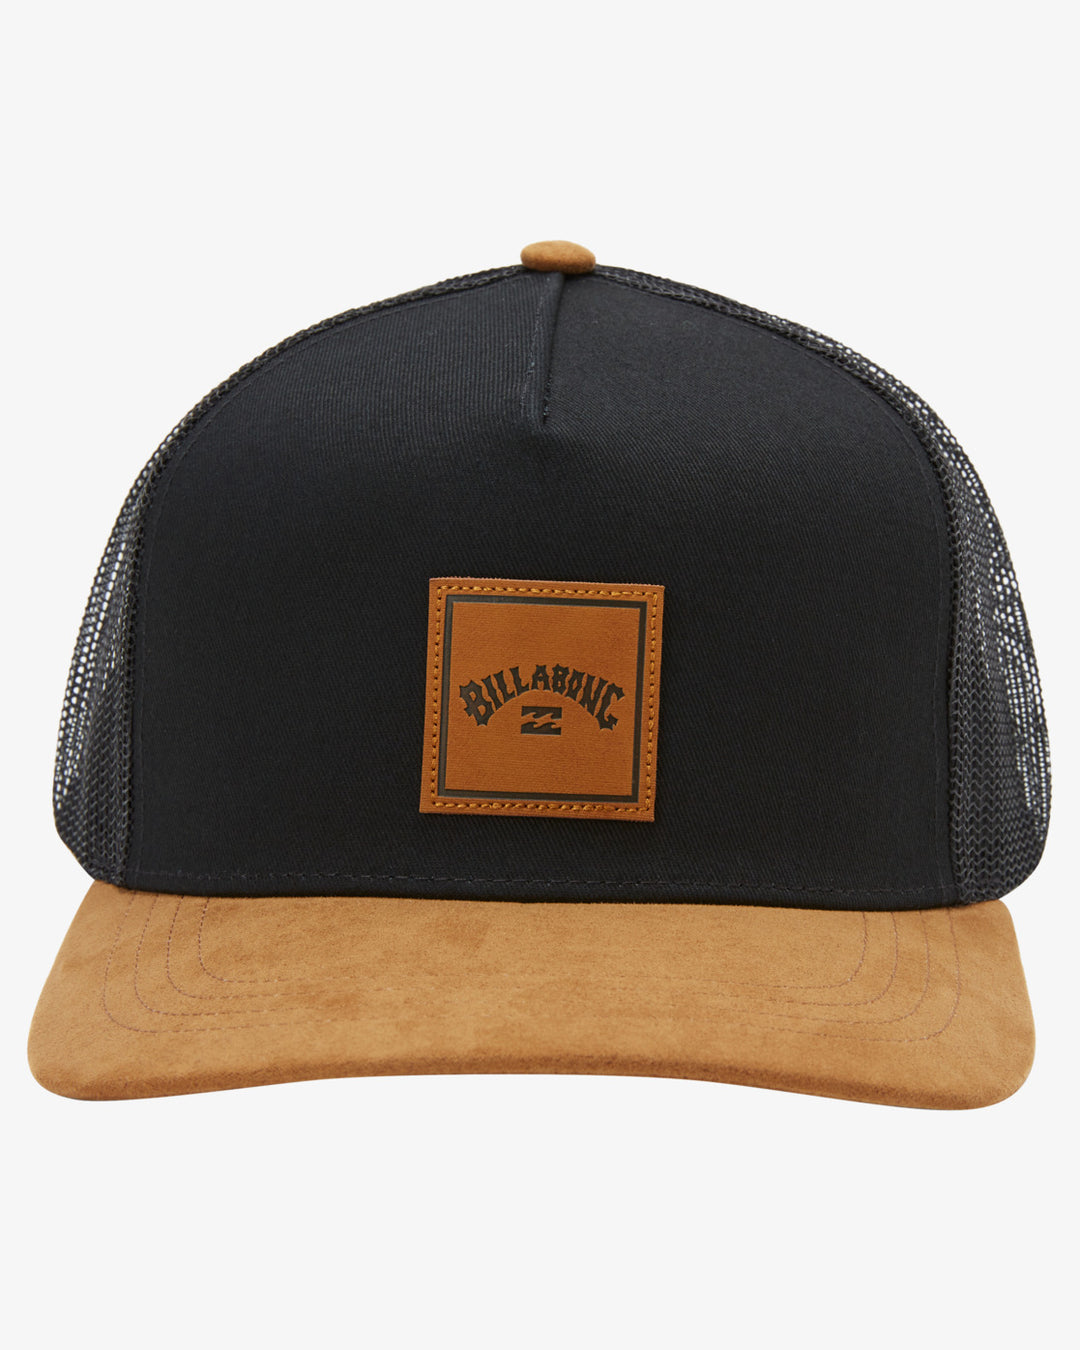 Billabong Stacked Trucker Hat Black/Tan - Diego Boardshop – Sun